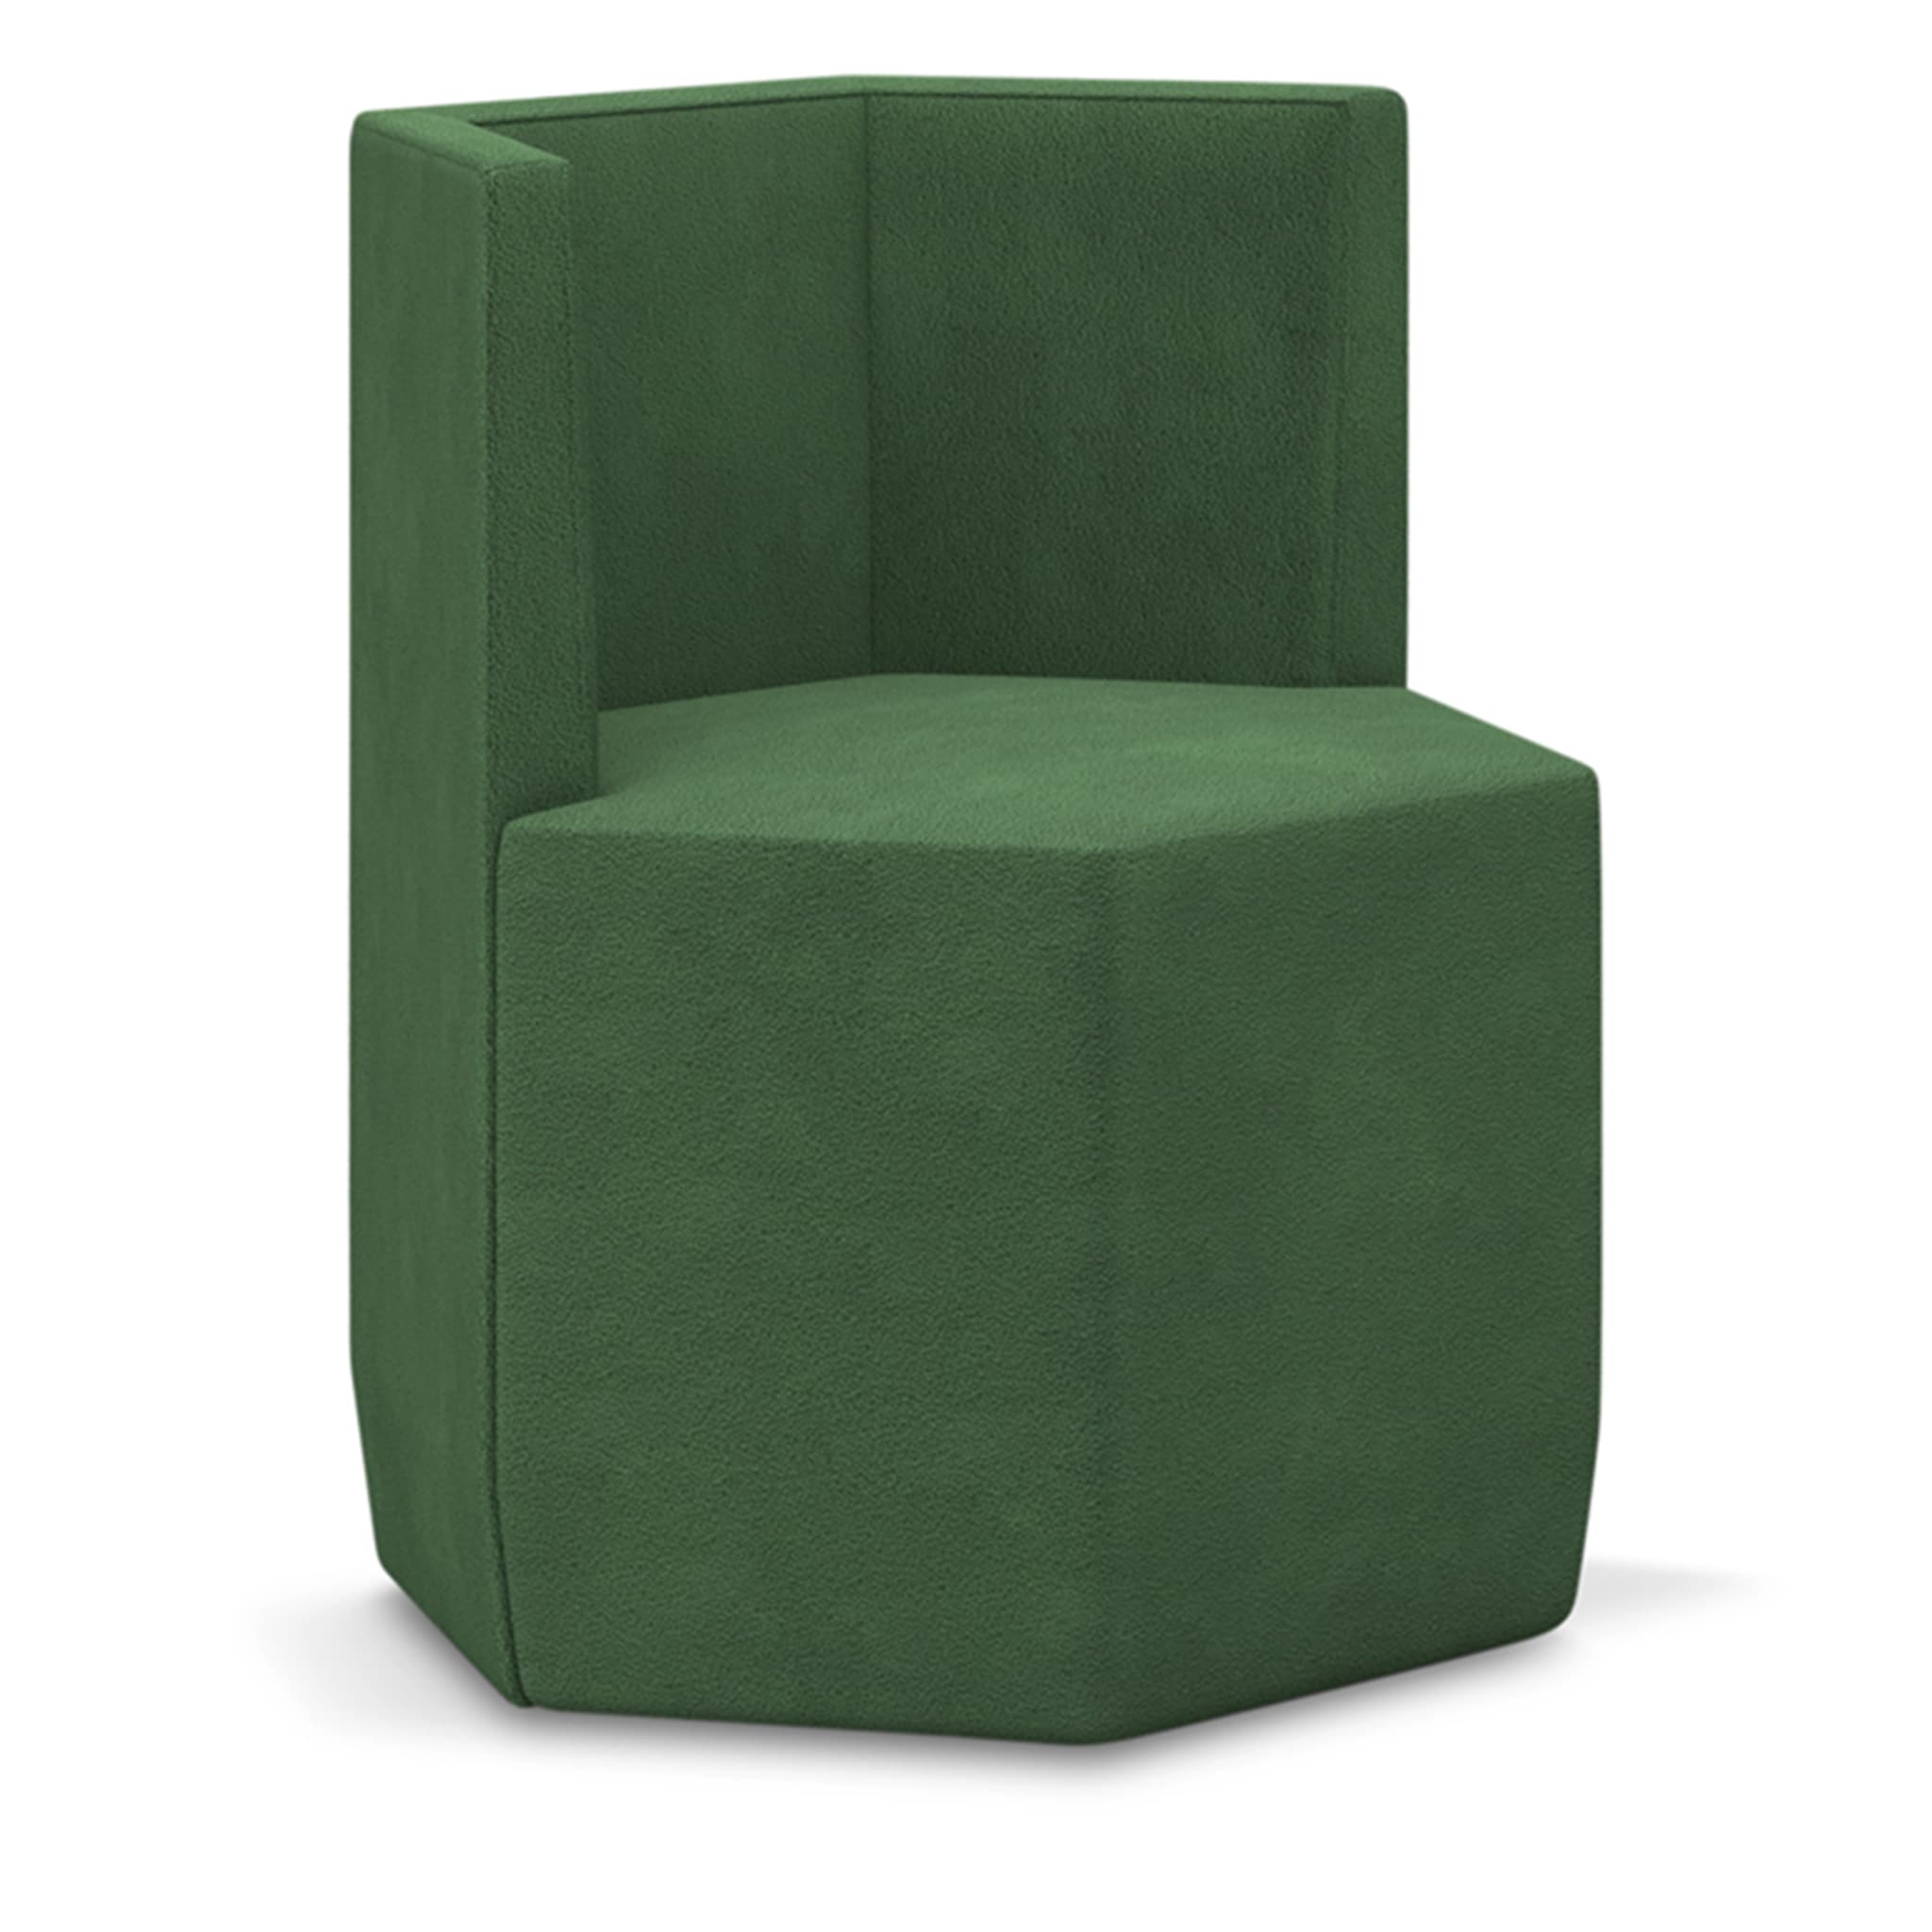 Tigram Niedriger Grüner Sessel von Italo Pertichini - Alternative Ansicht 1